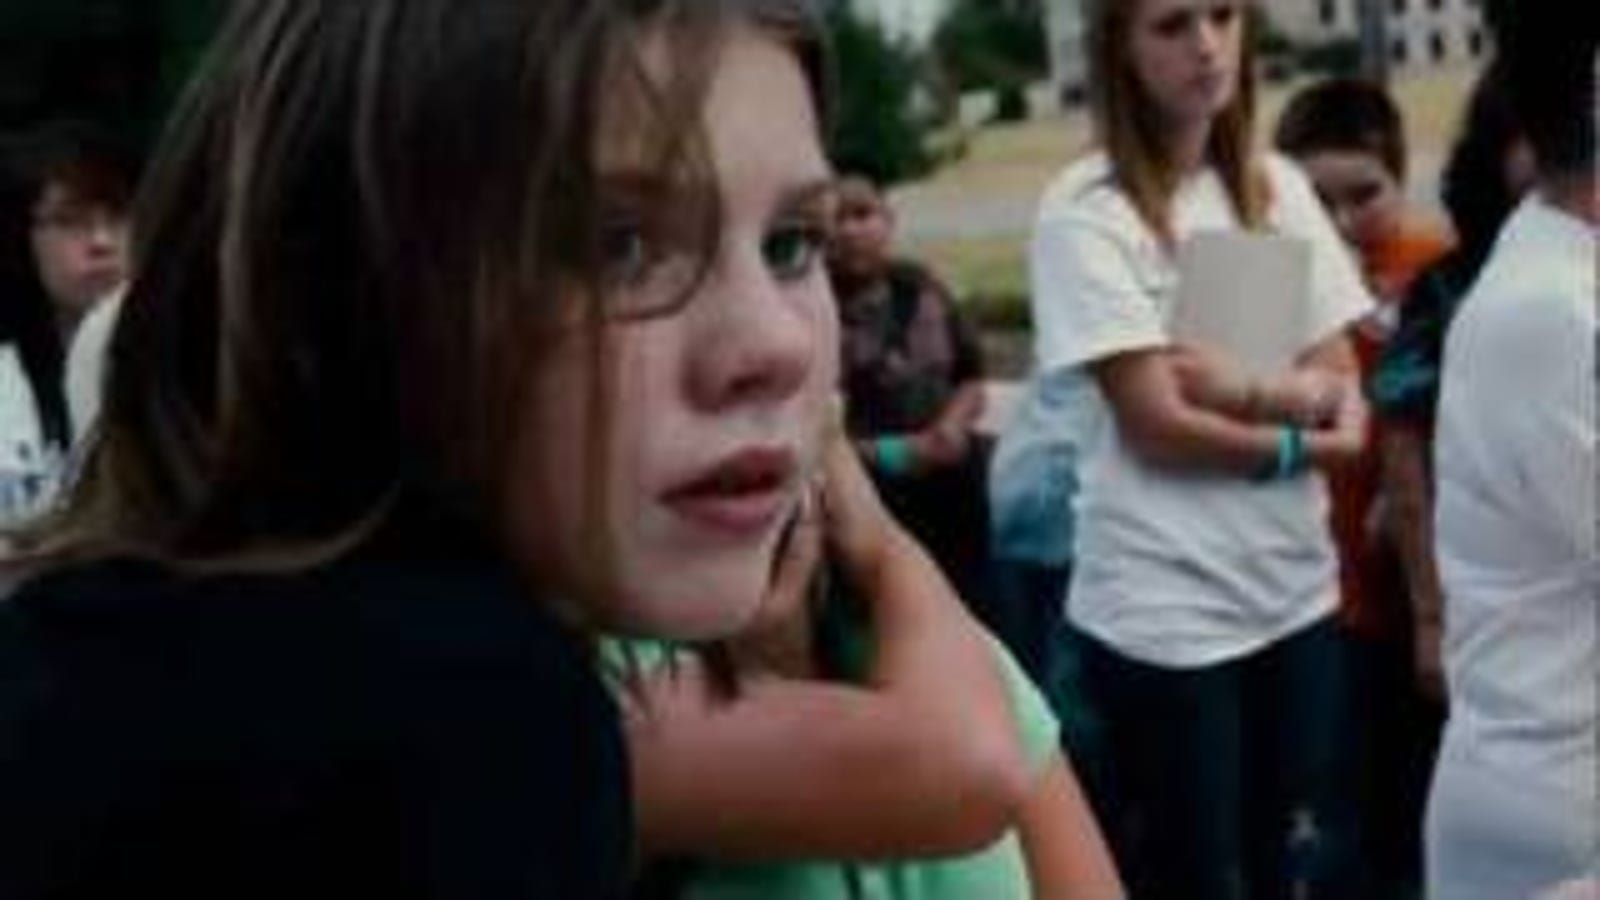 Bully Documentary Looks Heartbreaking And Hopeful 